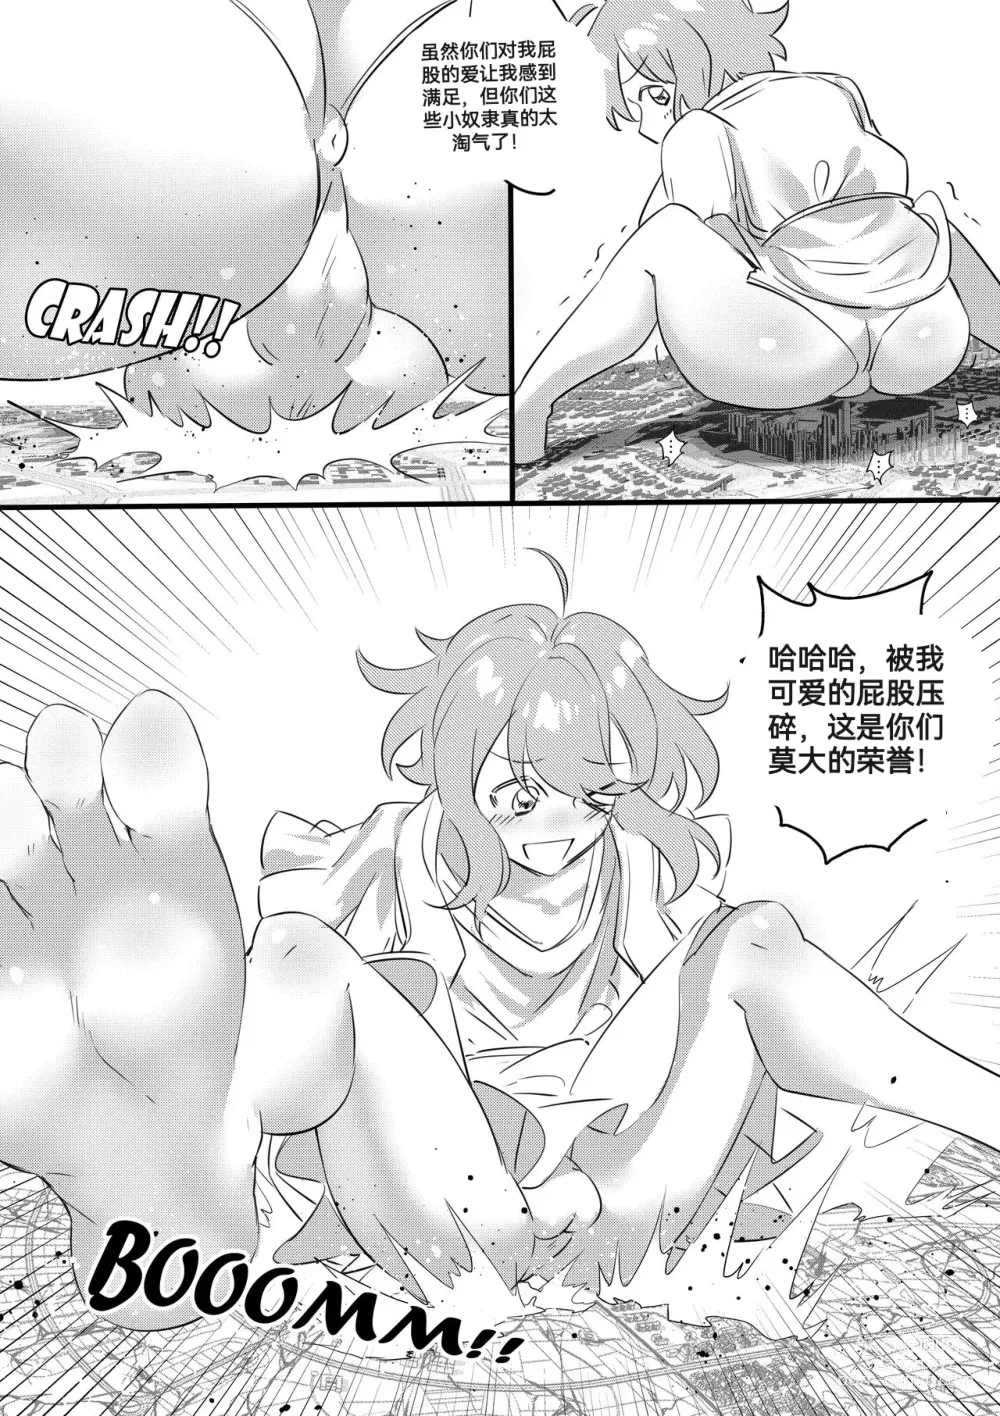 Page 11 of manga 自我翻译（五）gw论坛转载，落叶秋风